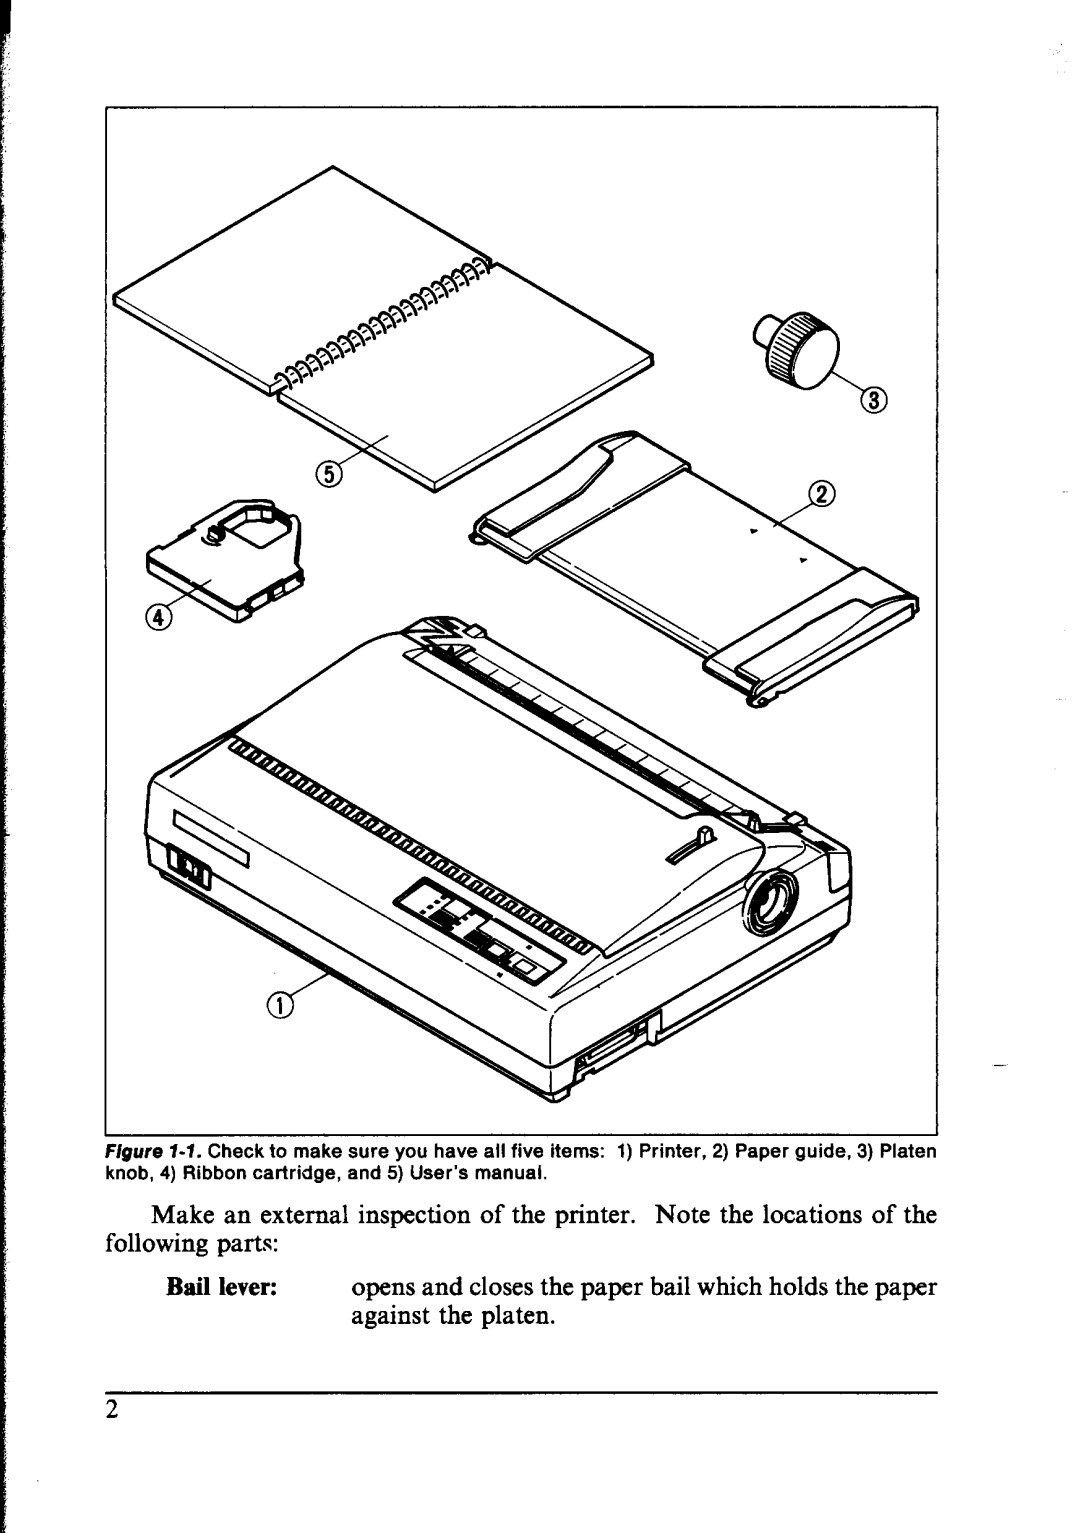 Star Micronics NX-1000 manual FIgwe 1-l. Check to make knob, 4 Ribbon cartridge 